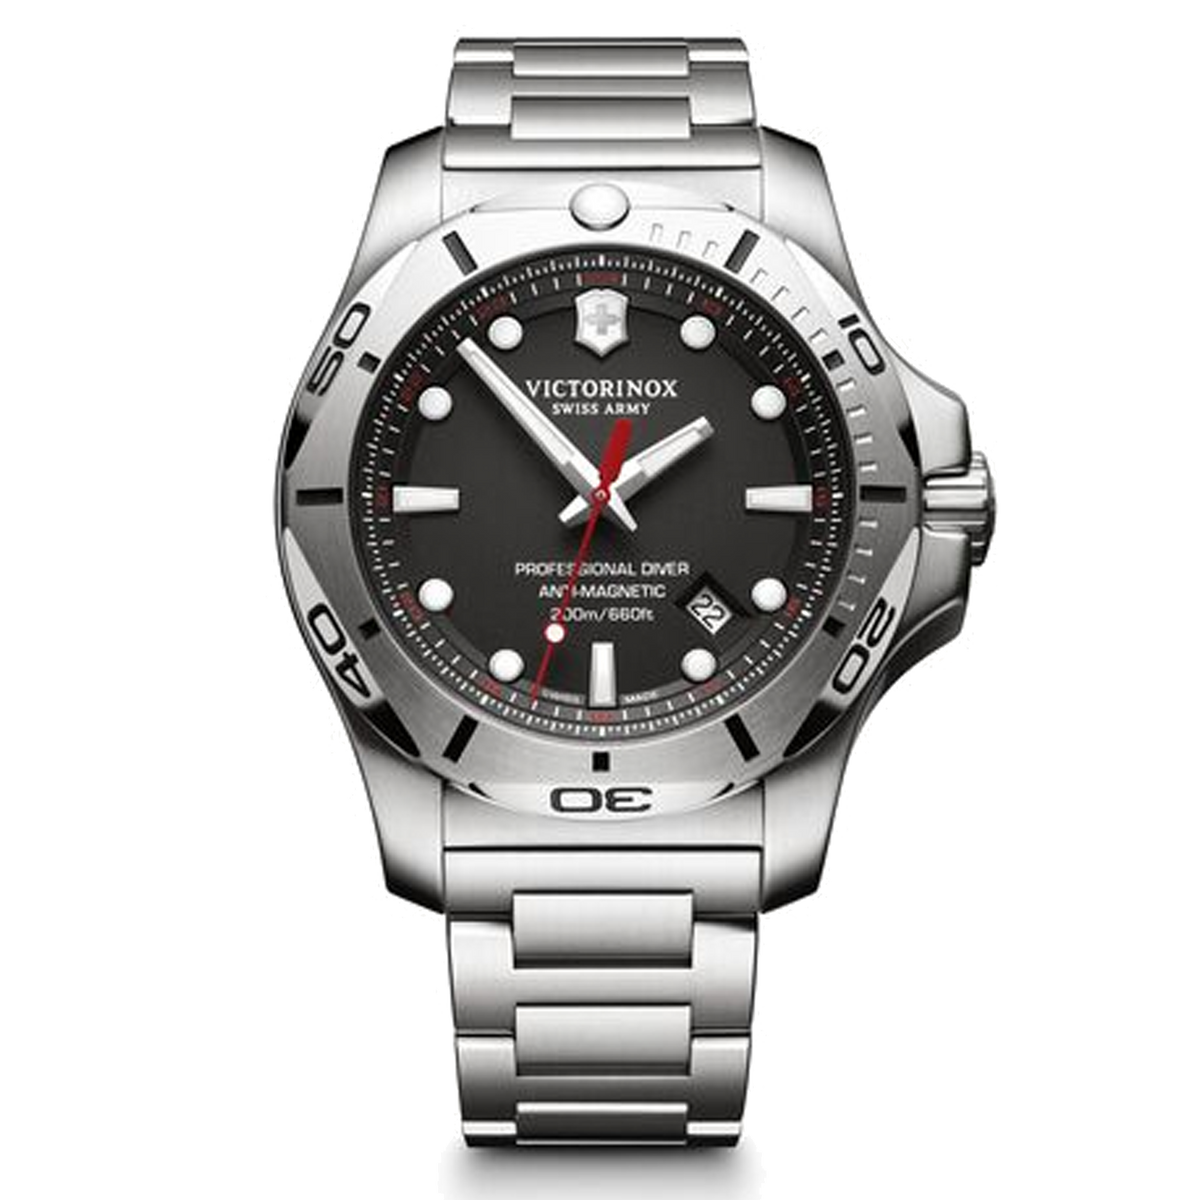 Victorinox Watch - I.N.O.X Professional Diver S/S